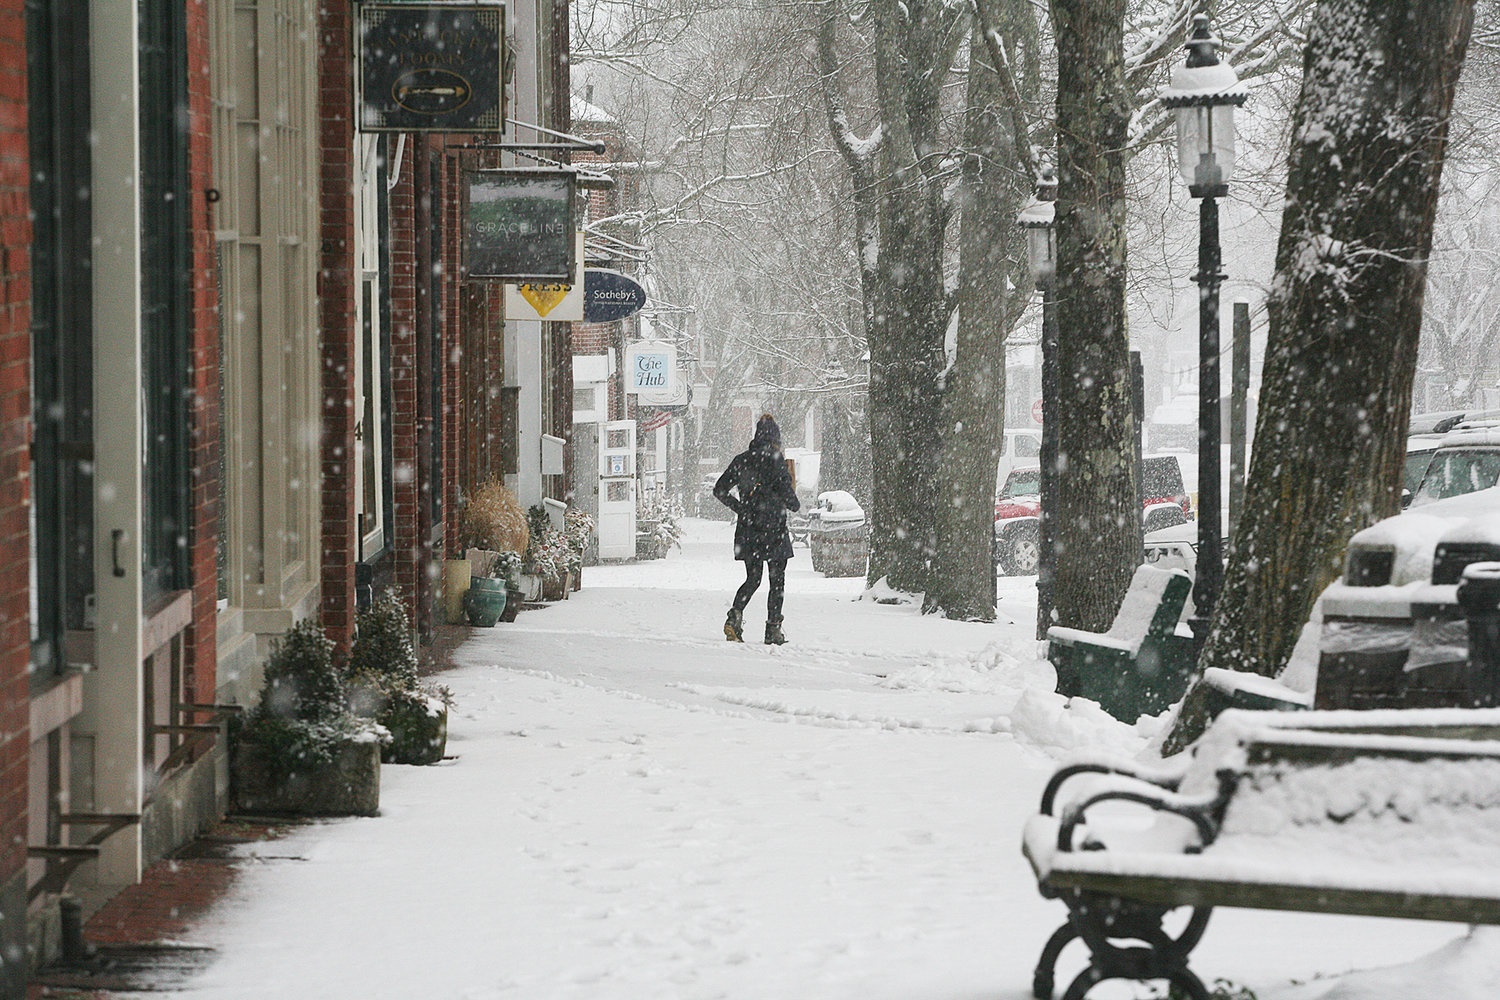 A pedestrian on Main Street during Thursday's snow.